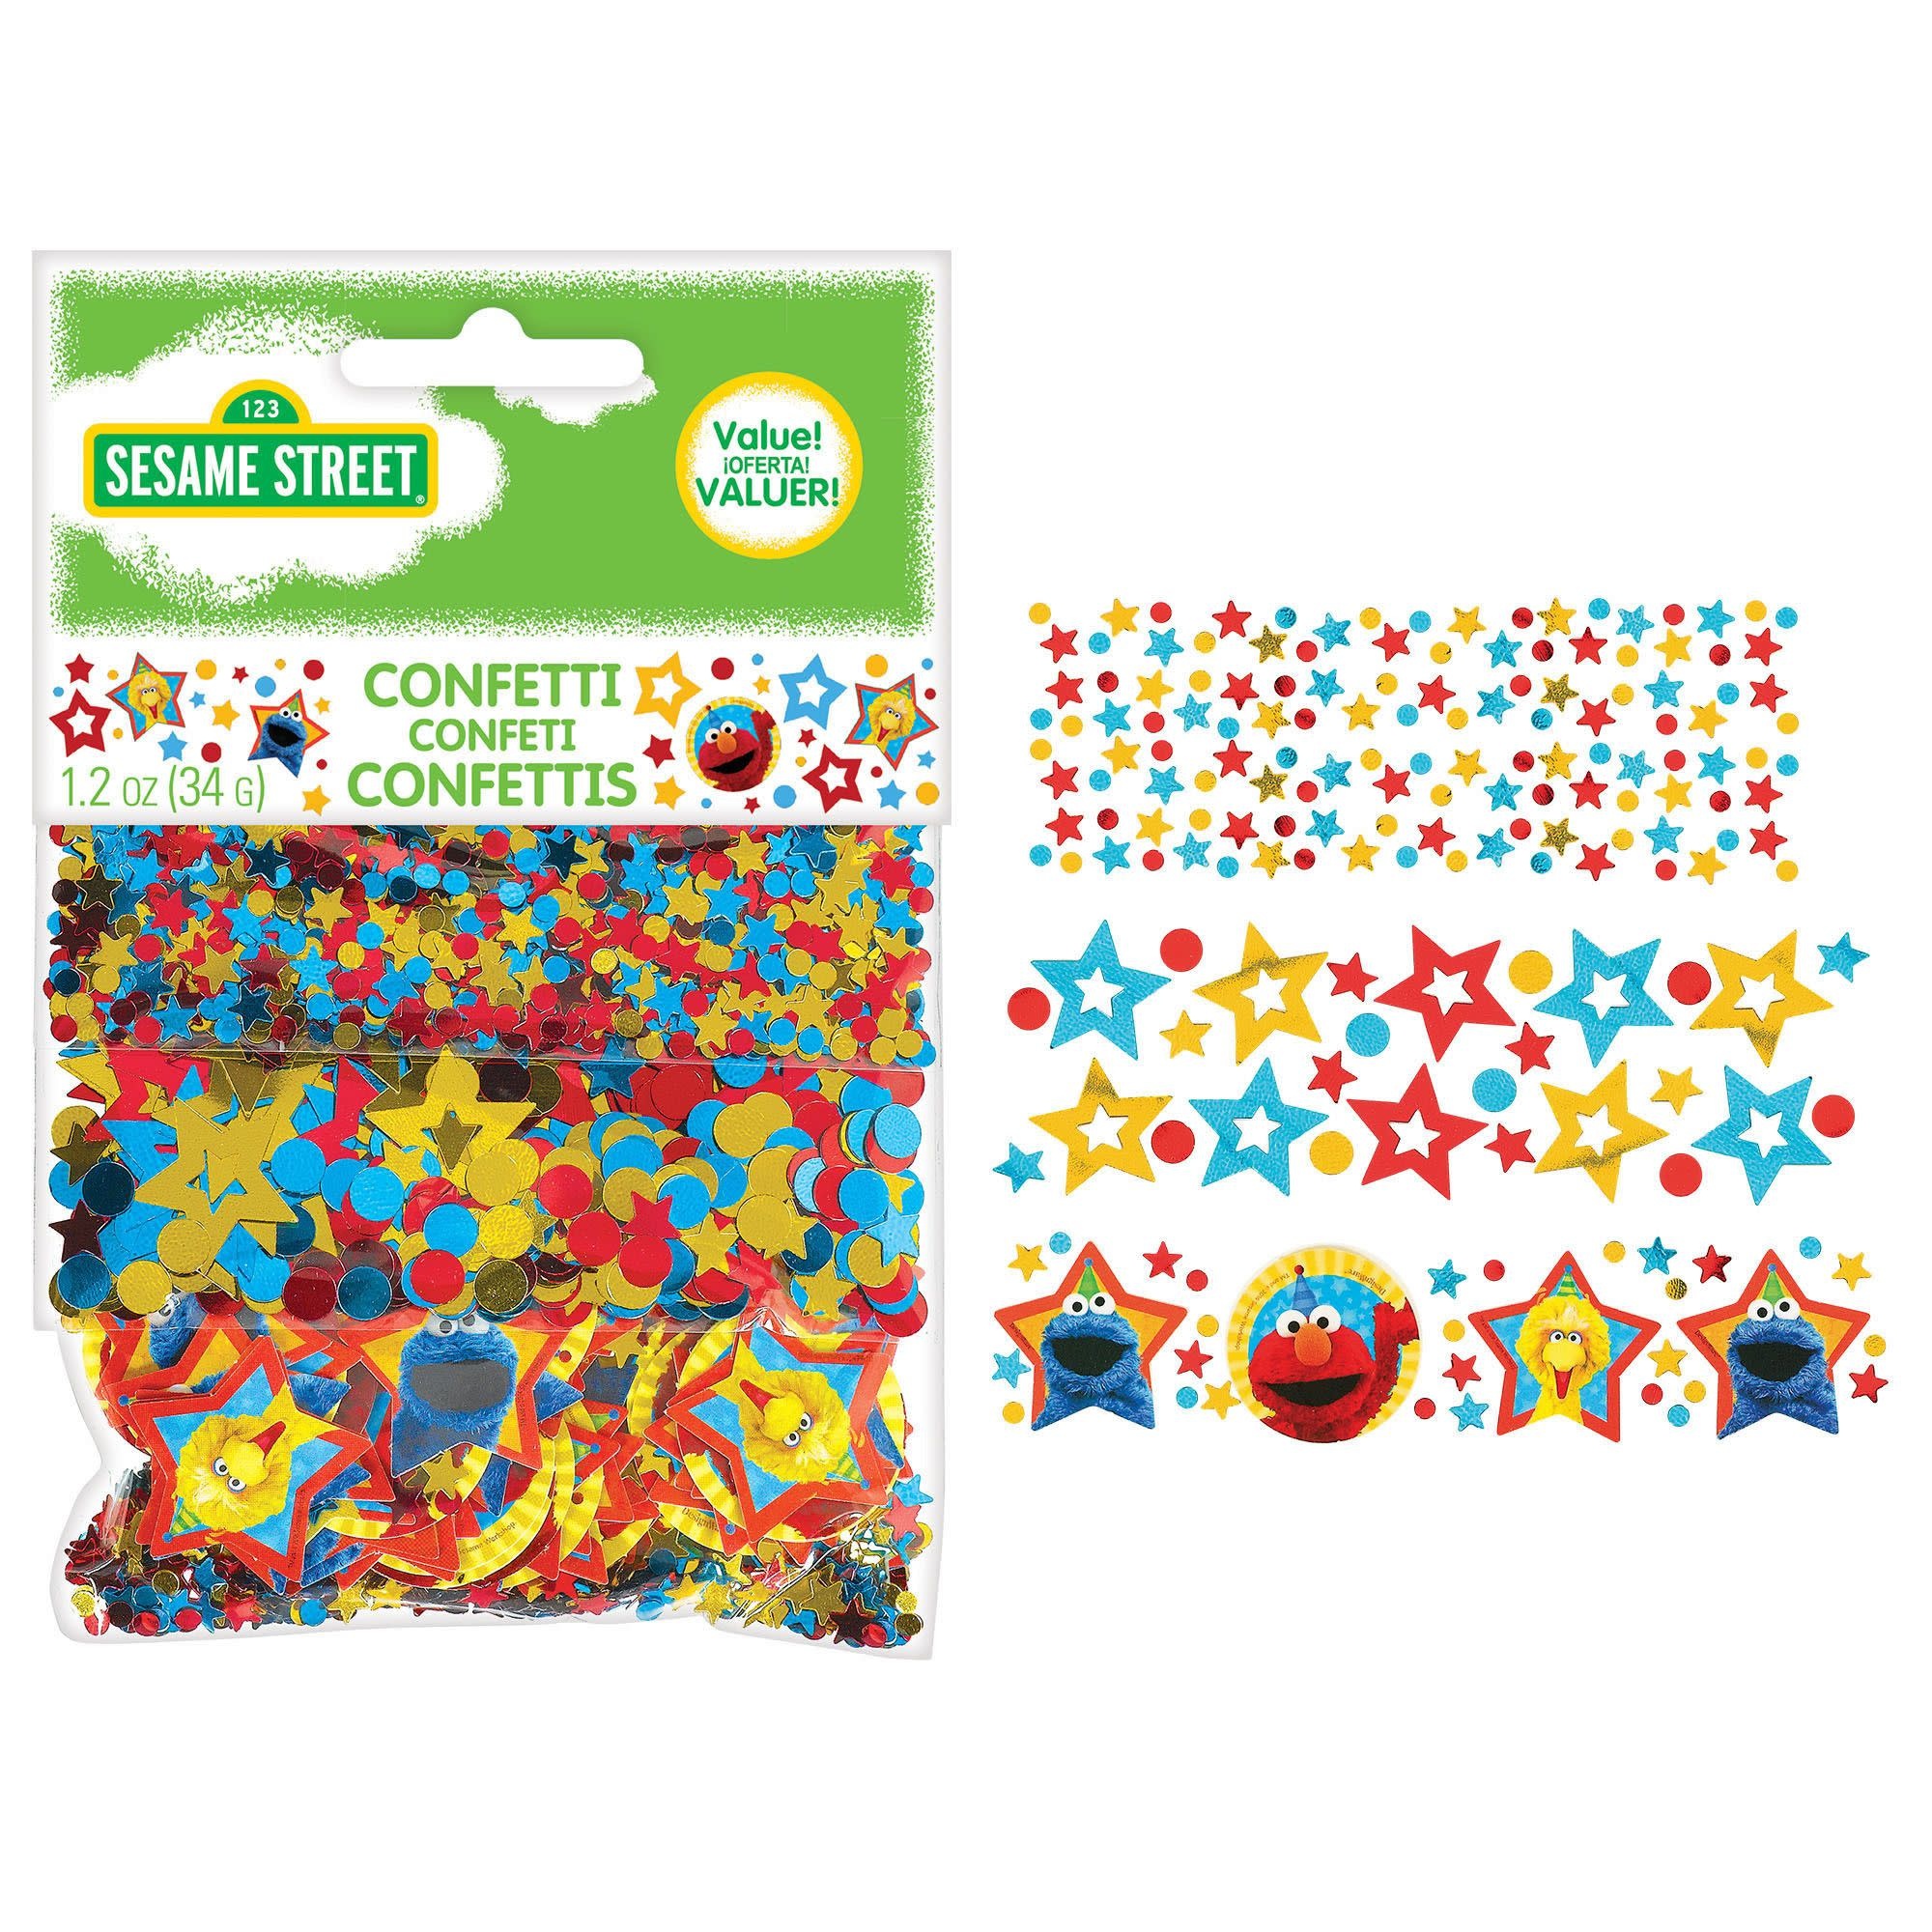 Sesame Street® Value Confetti